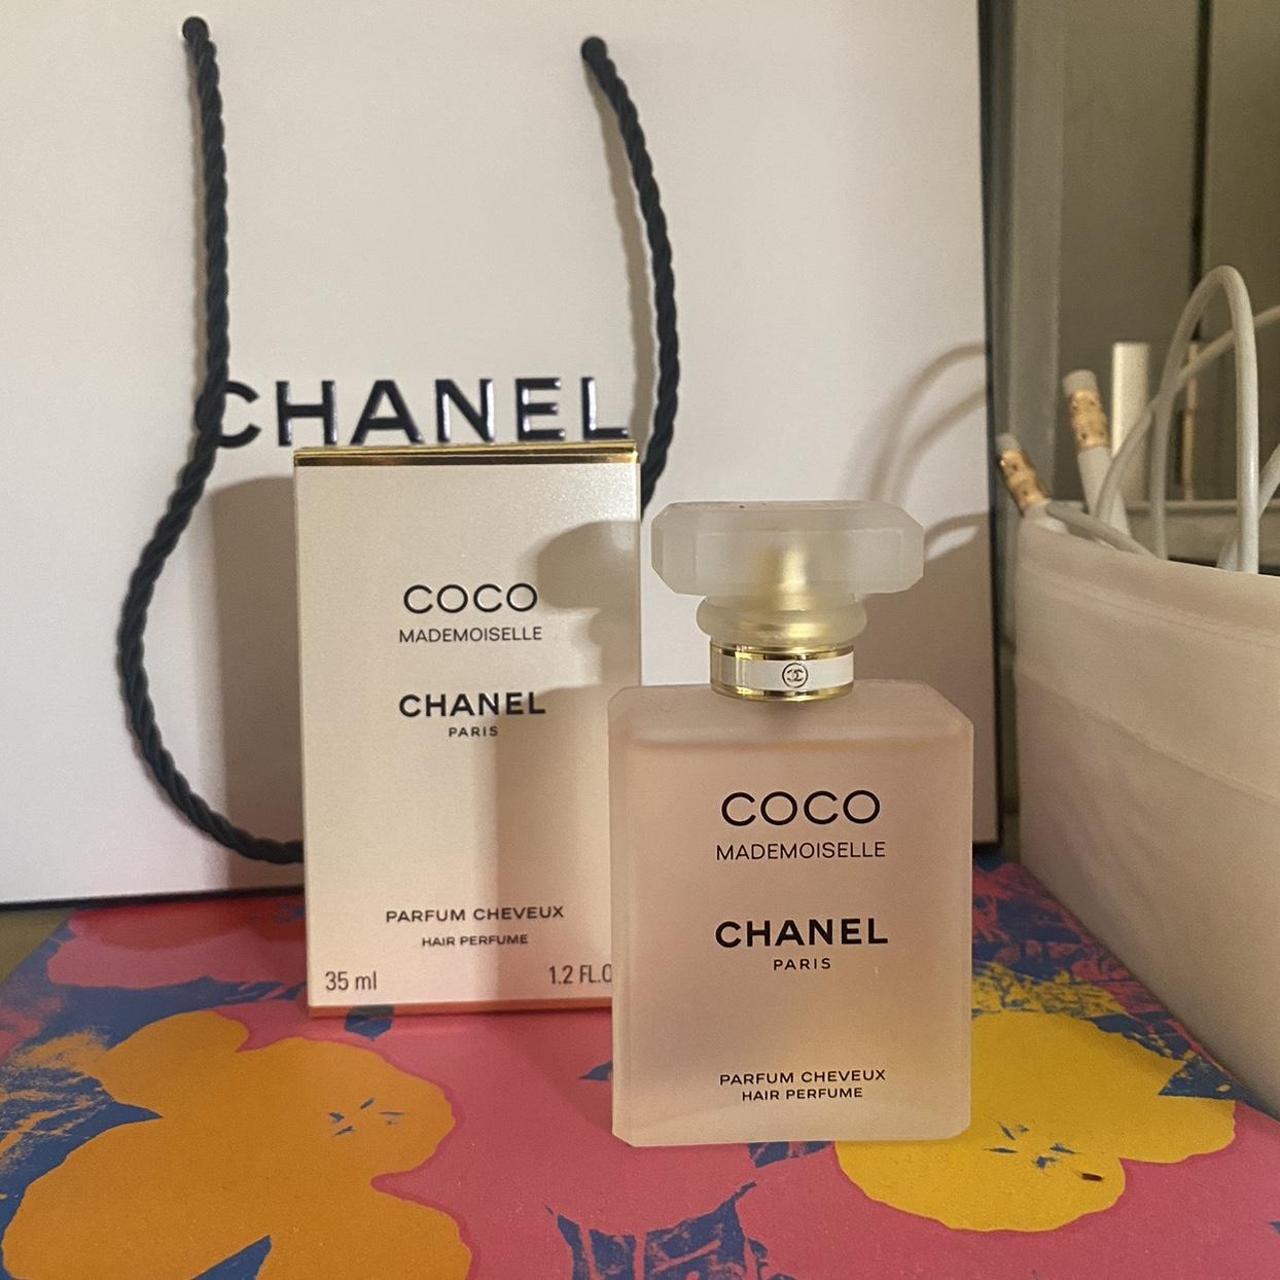 Chanel COCO MADEMOISELLE Hair Perfume, 1.2 oz... - Depop